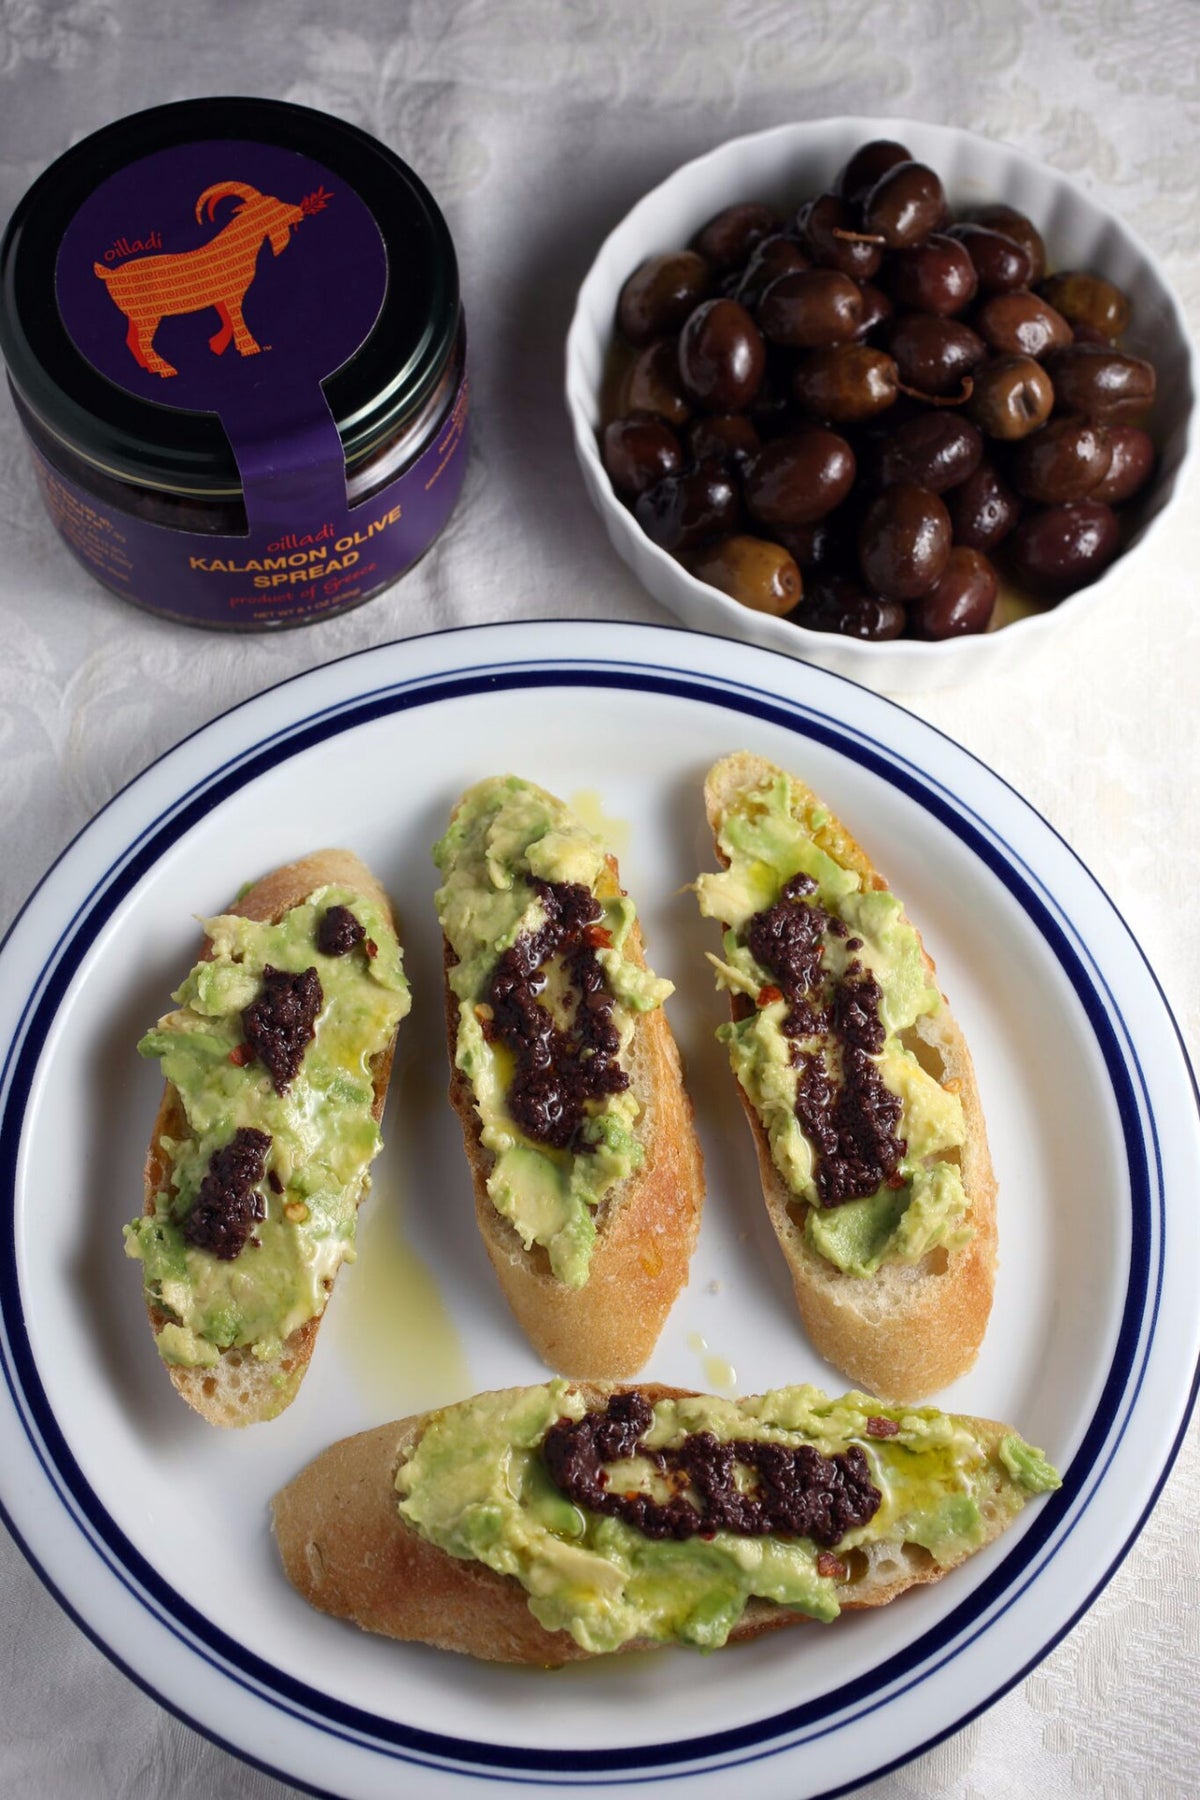 Oilladi Kalamon olive spread, avocado on bread with olives